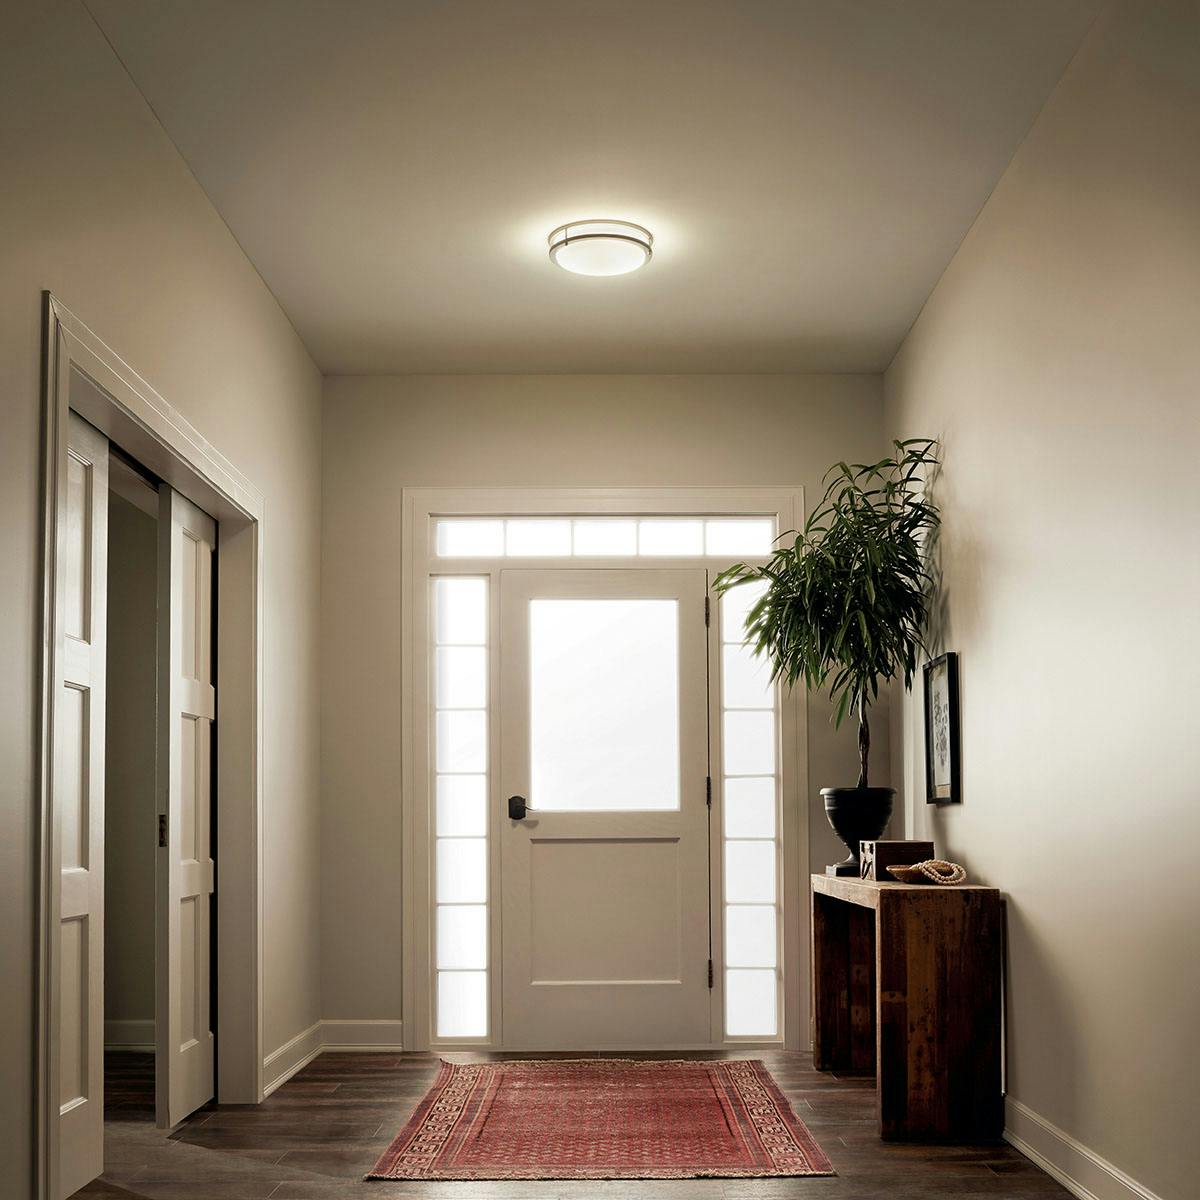 Day time Hallway image featuring Avon flush mount light 10769NILED